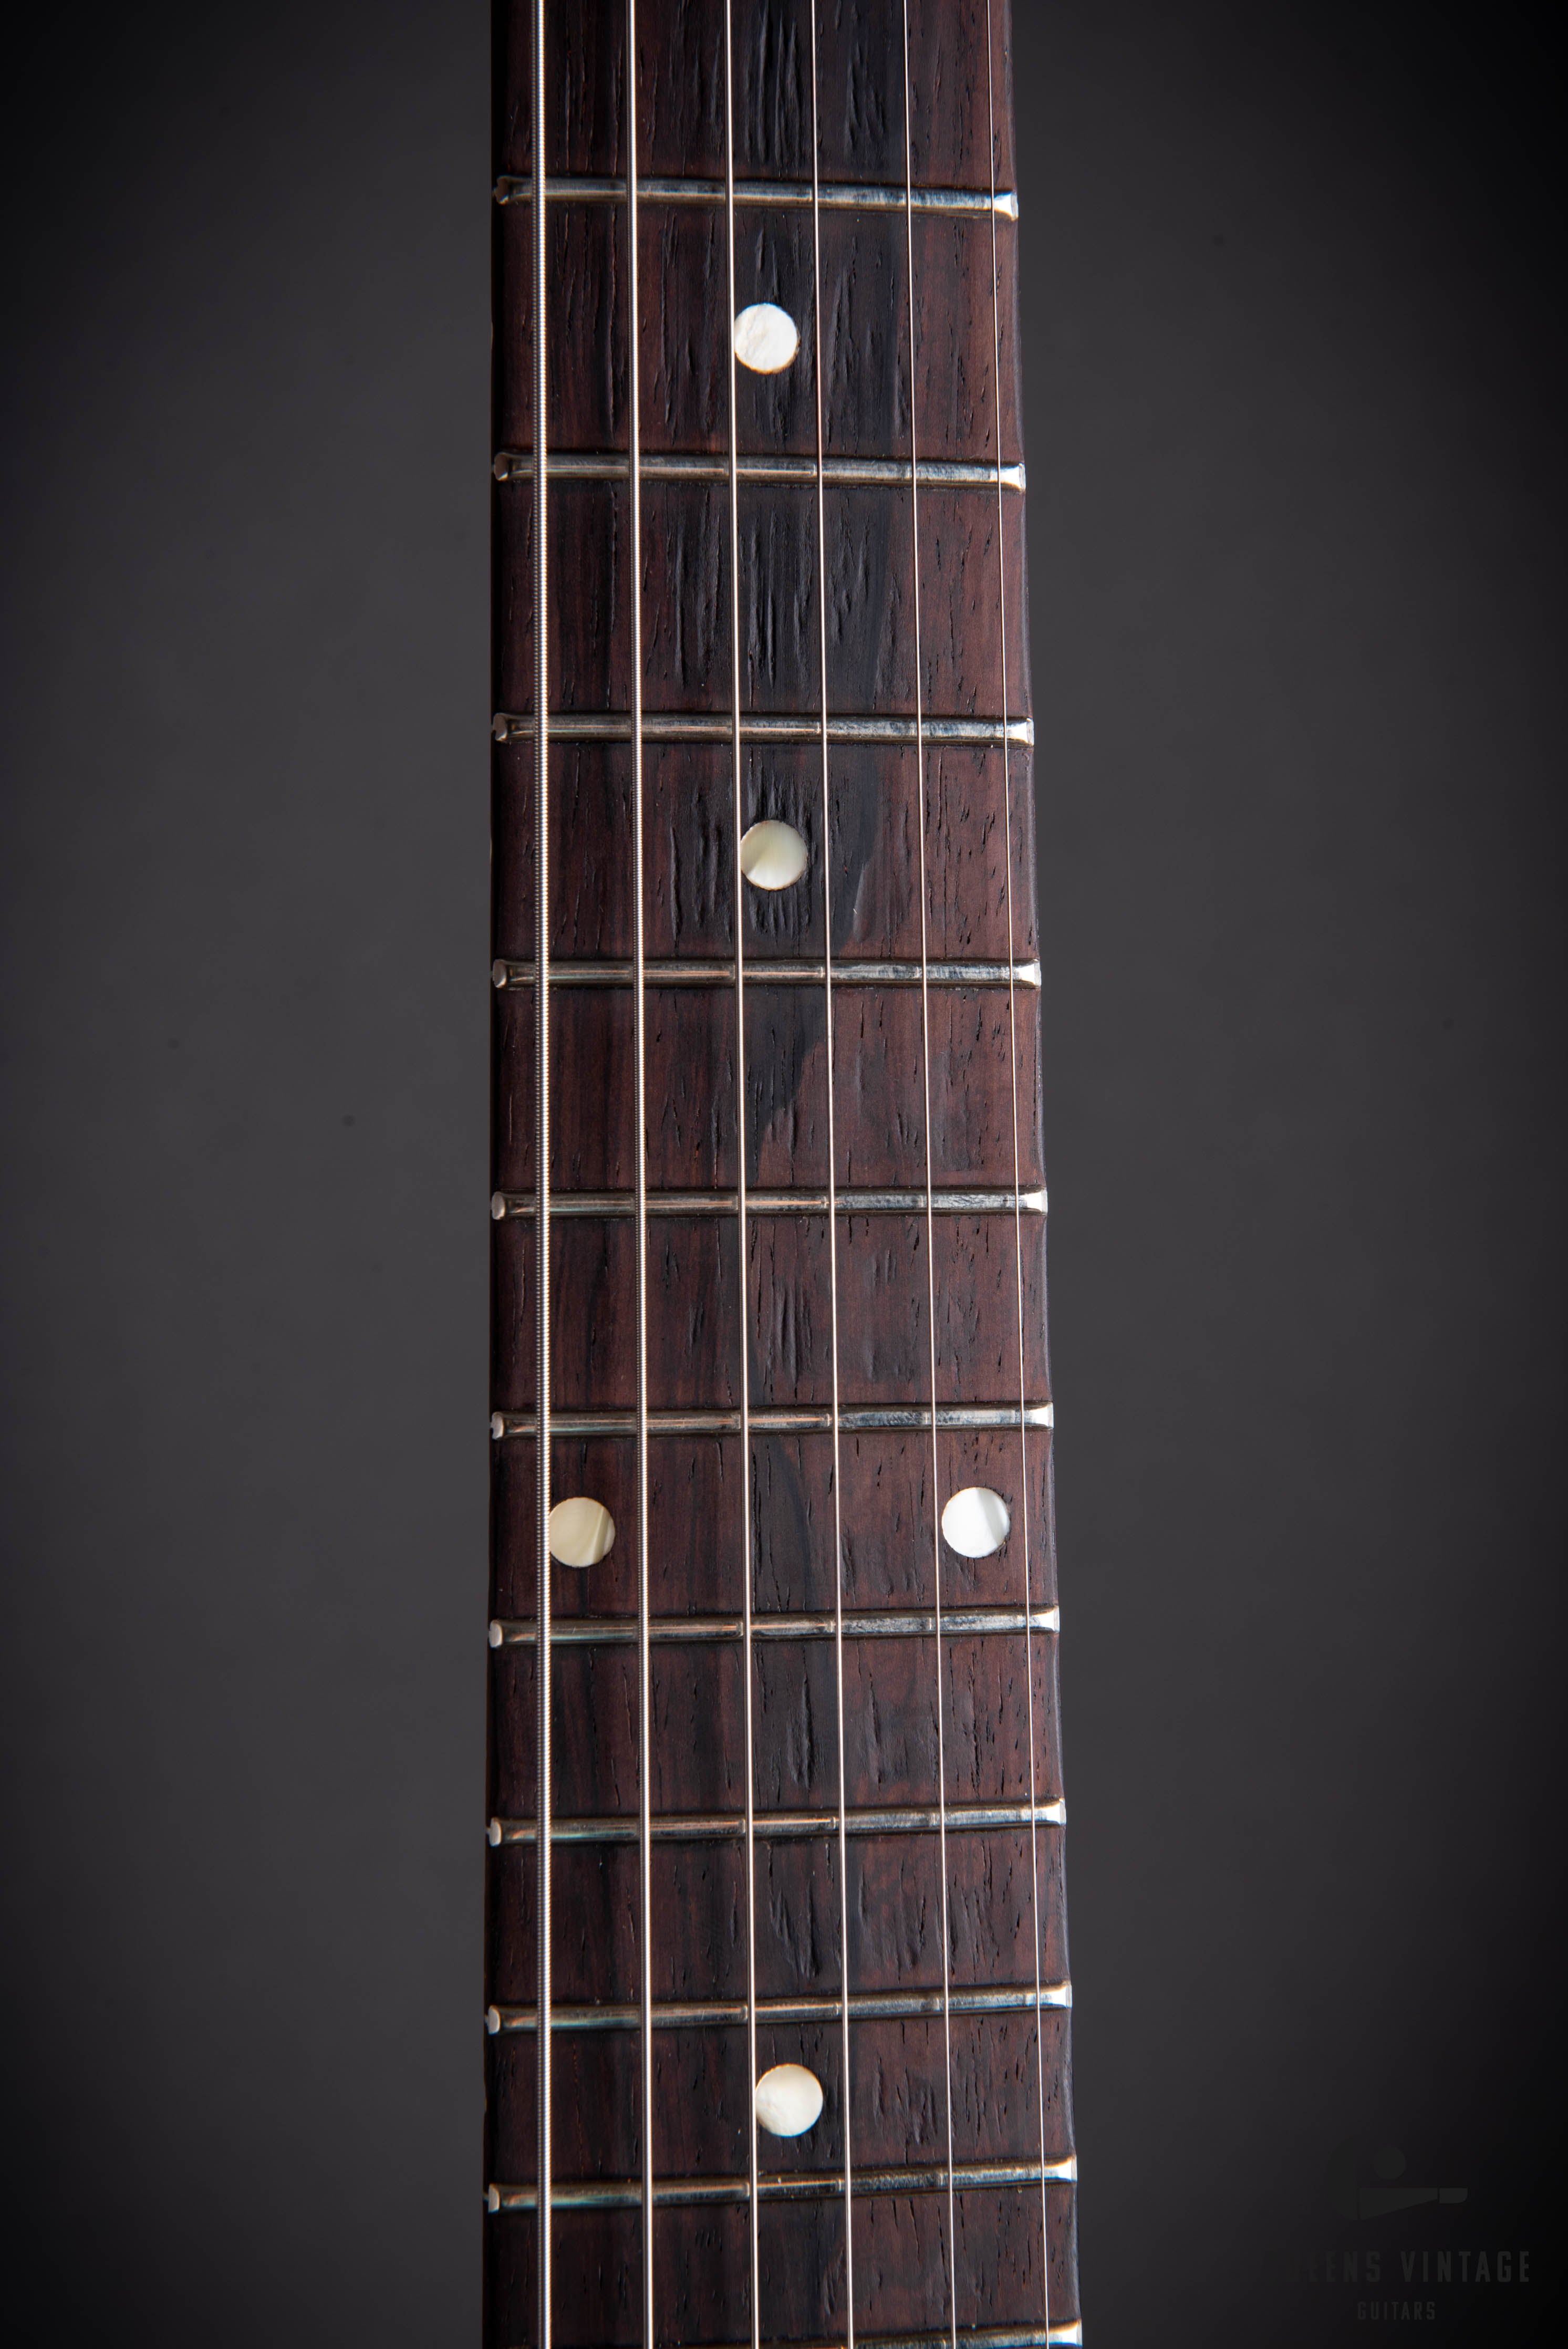 1962 Gibson Les Paul SG Jr. Electric Guitar